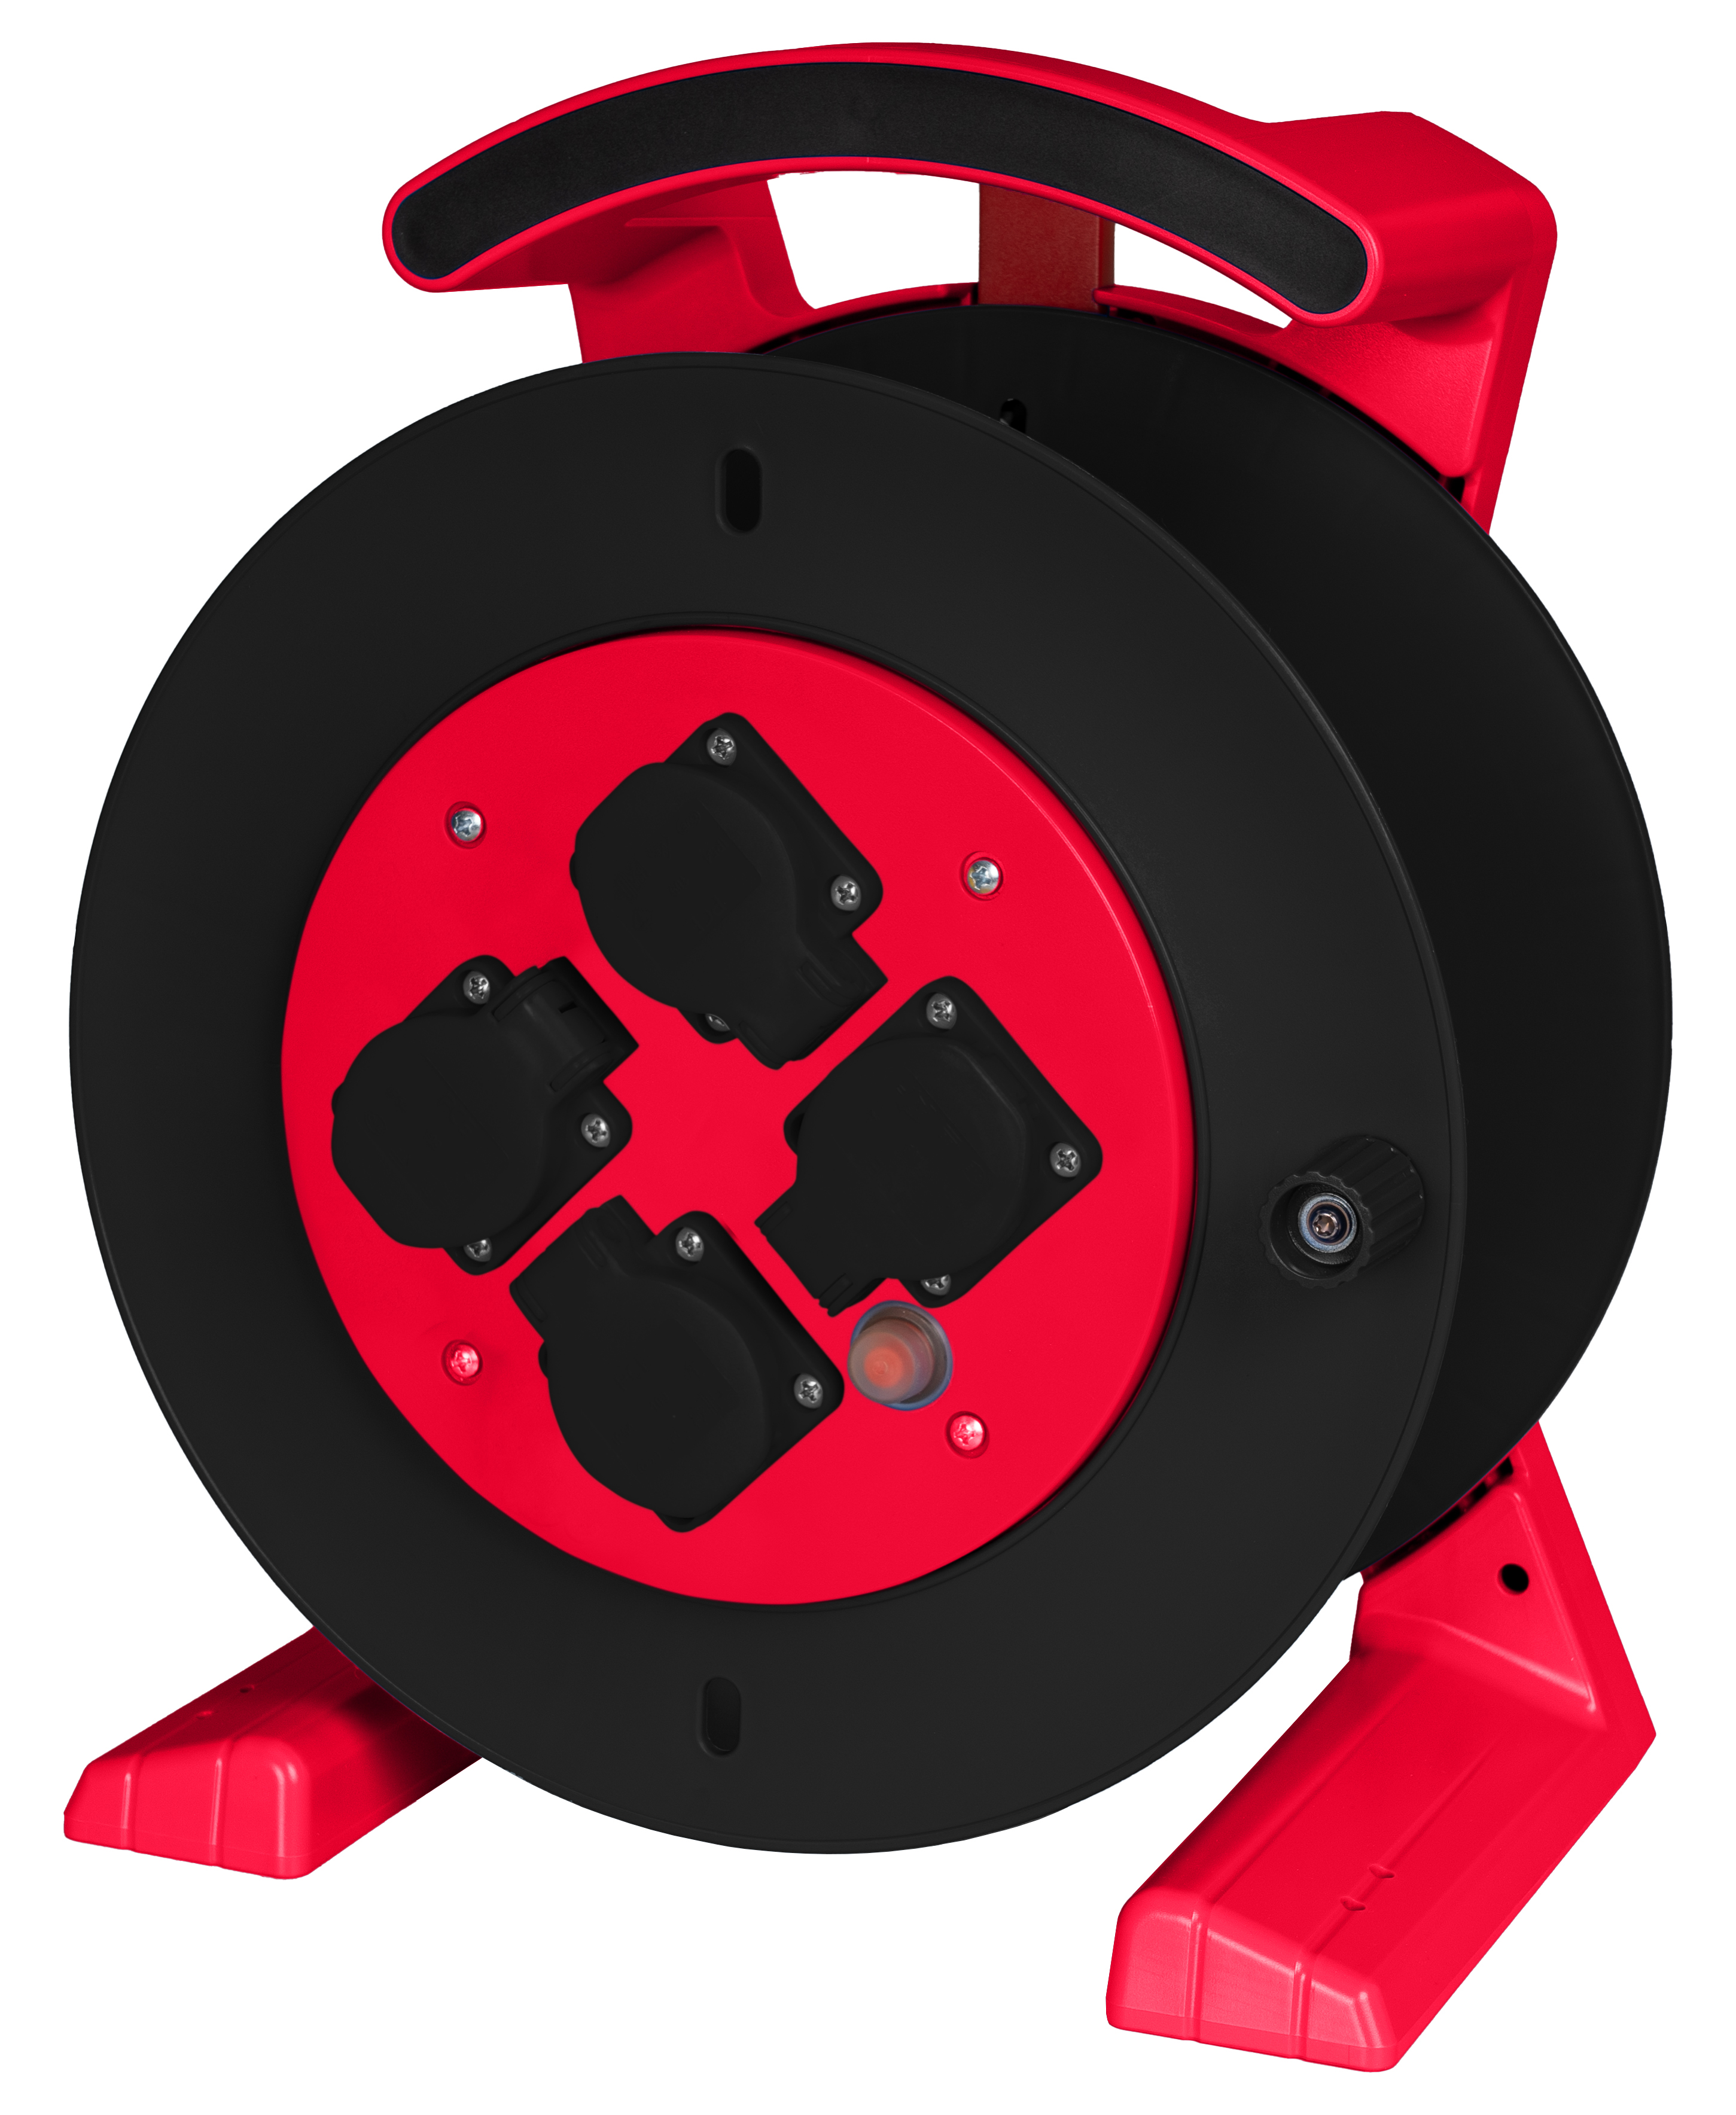 Leerkabeltrommel in rot-schwarz, 4 x Schutzkontakt-Steckdose JUMBO L 2.0